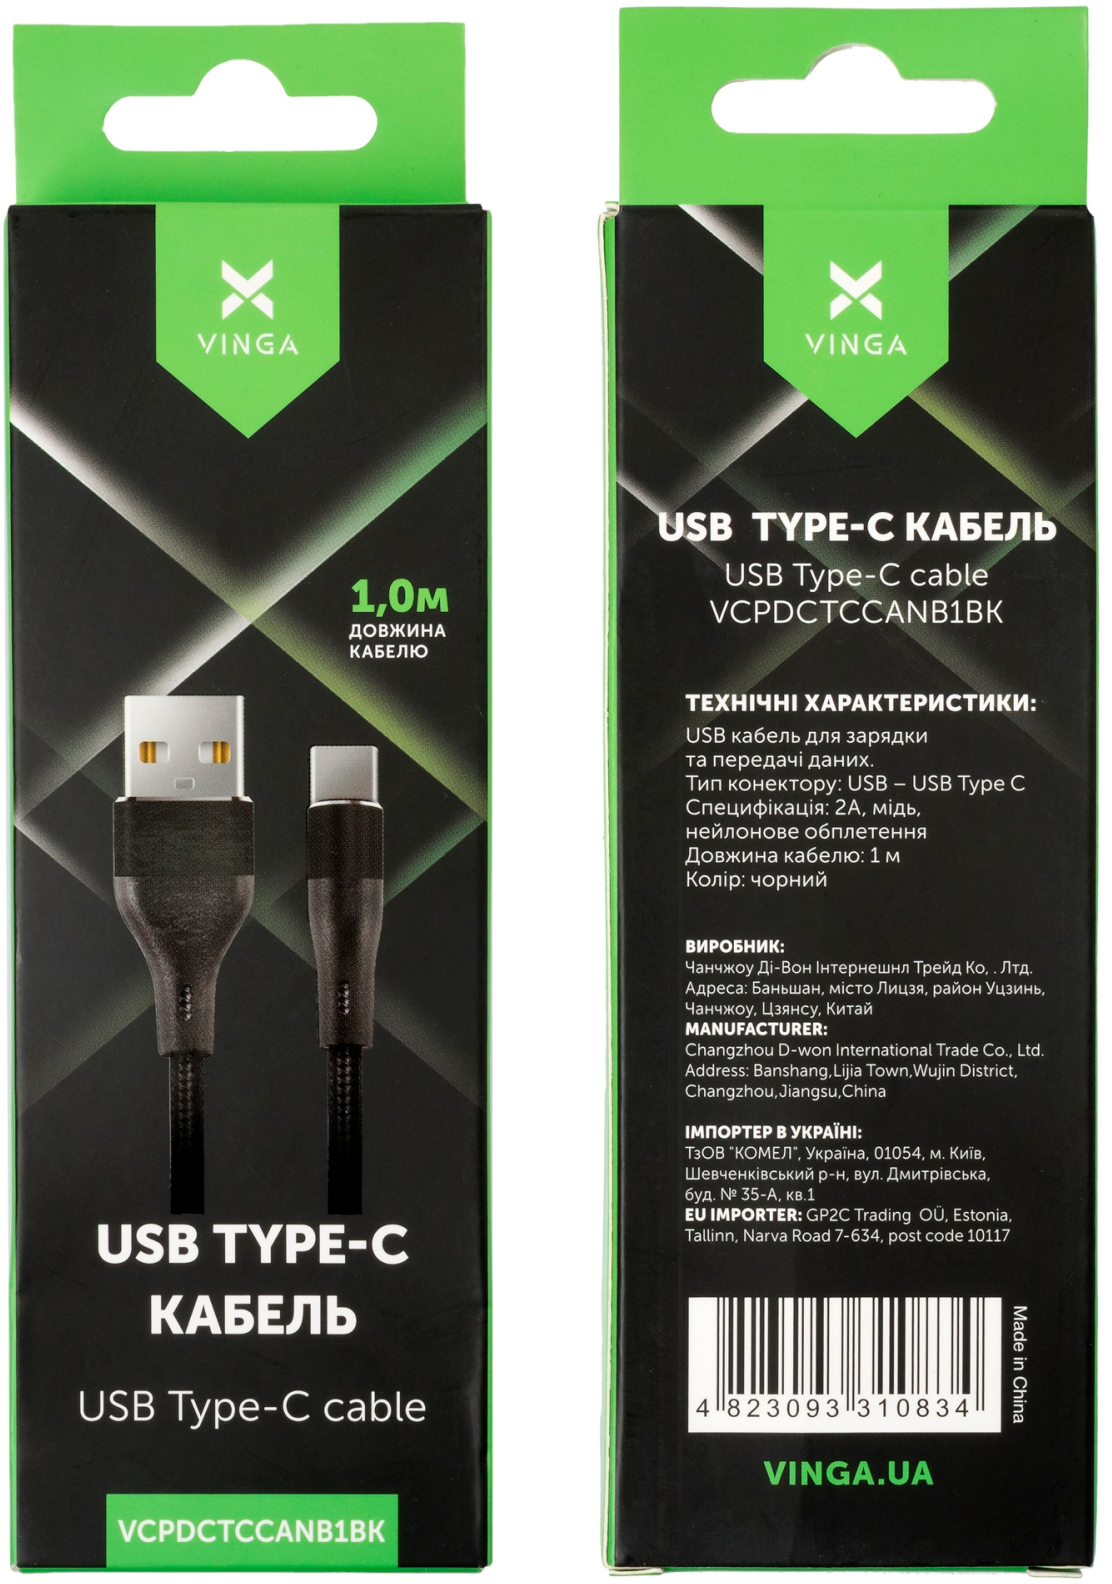 продаём Vinga USB 2.0 AM to Type-C 1.0m cylindric nylon back (VCPDCTCCANB1BK) в Украине - фото 4